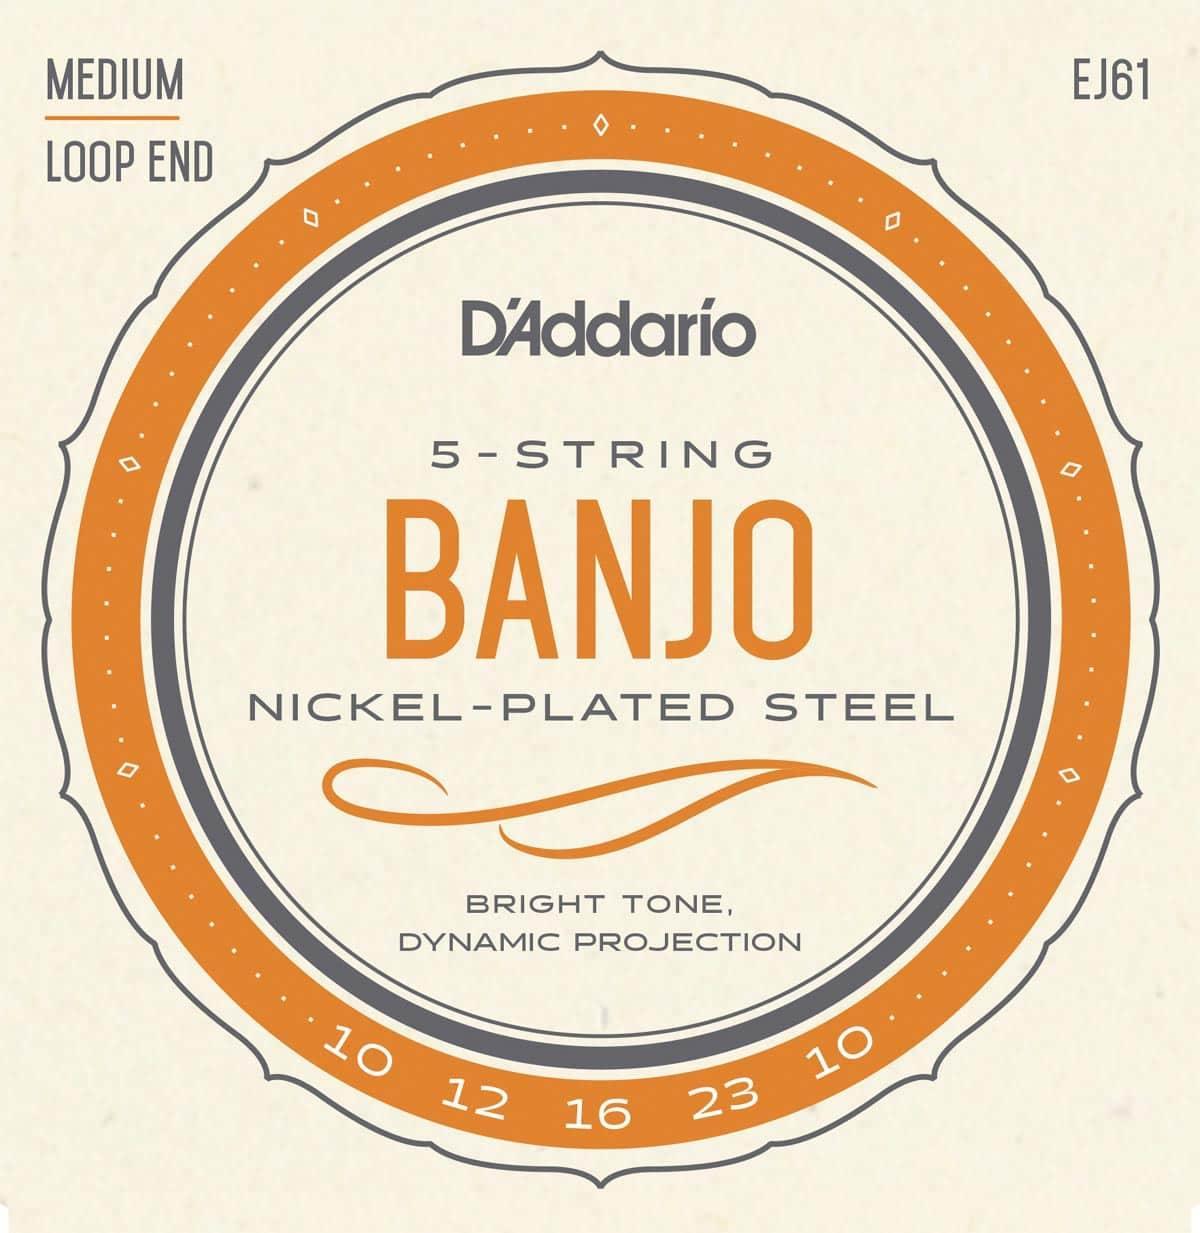 Daddario - Banjo Strings Set 10-23 Nickel Wound Medium EJ61 - Strings - Banjo by DAddario at Muso's Stuff